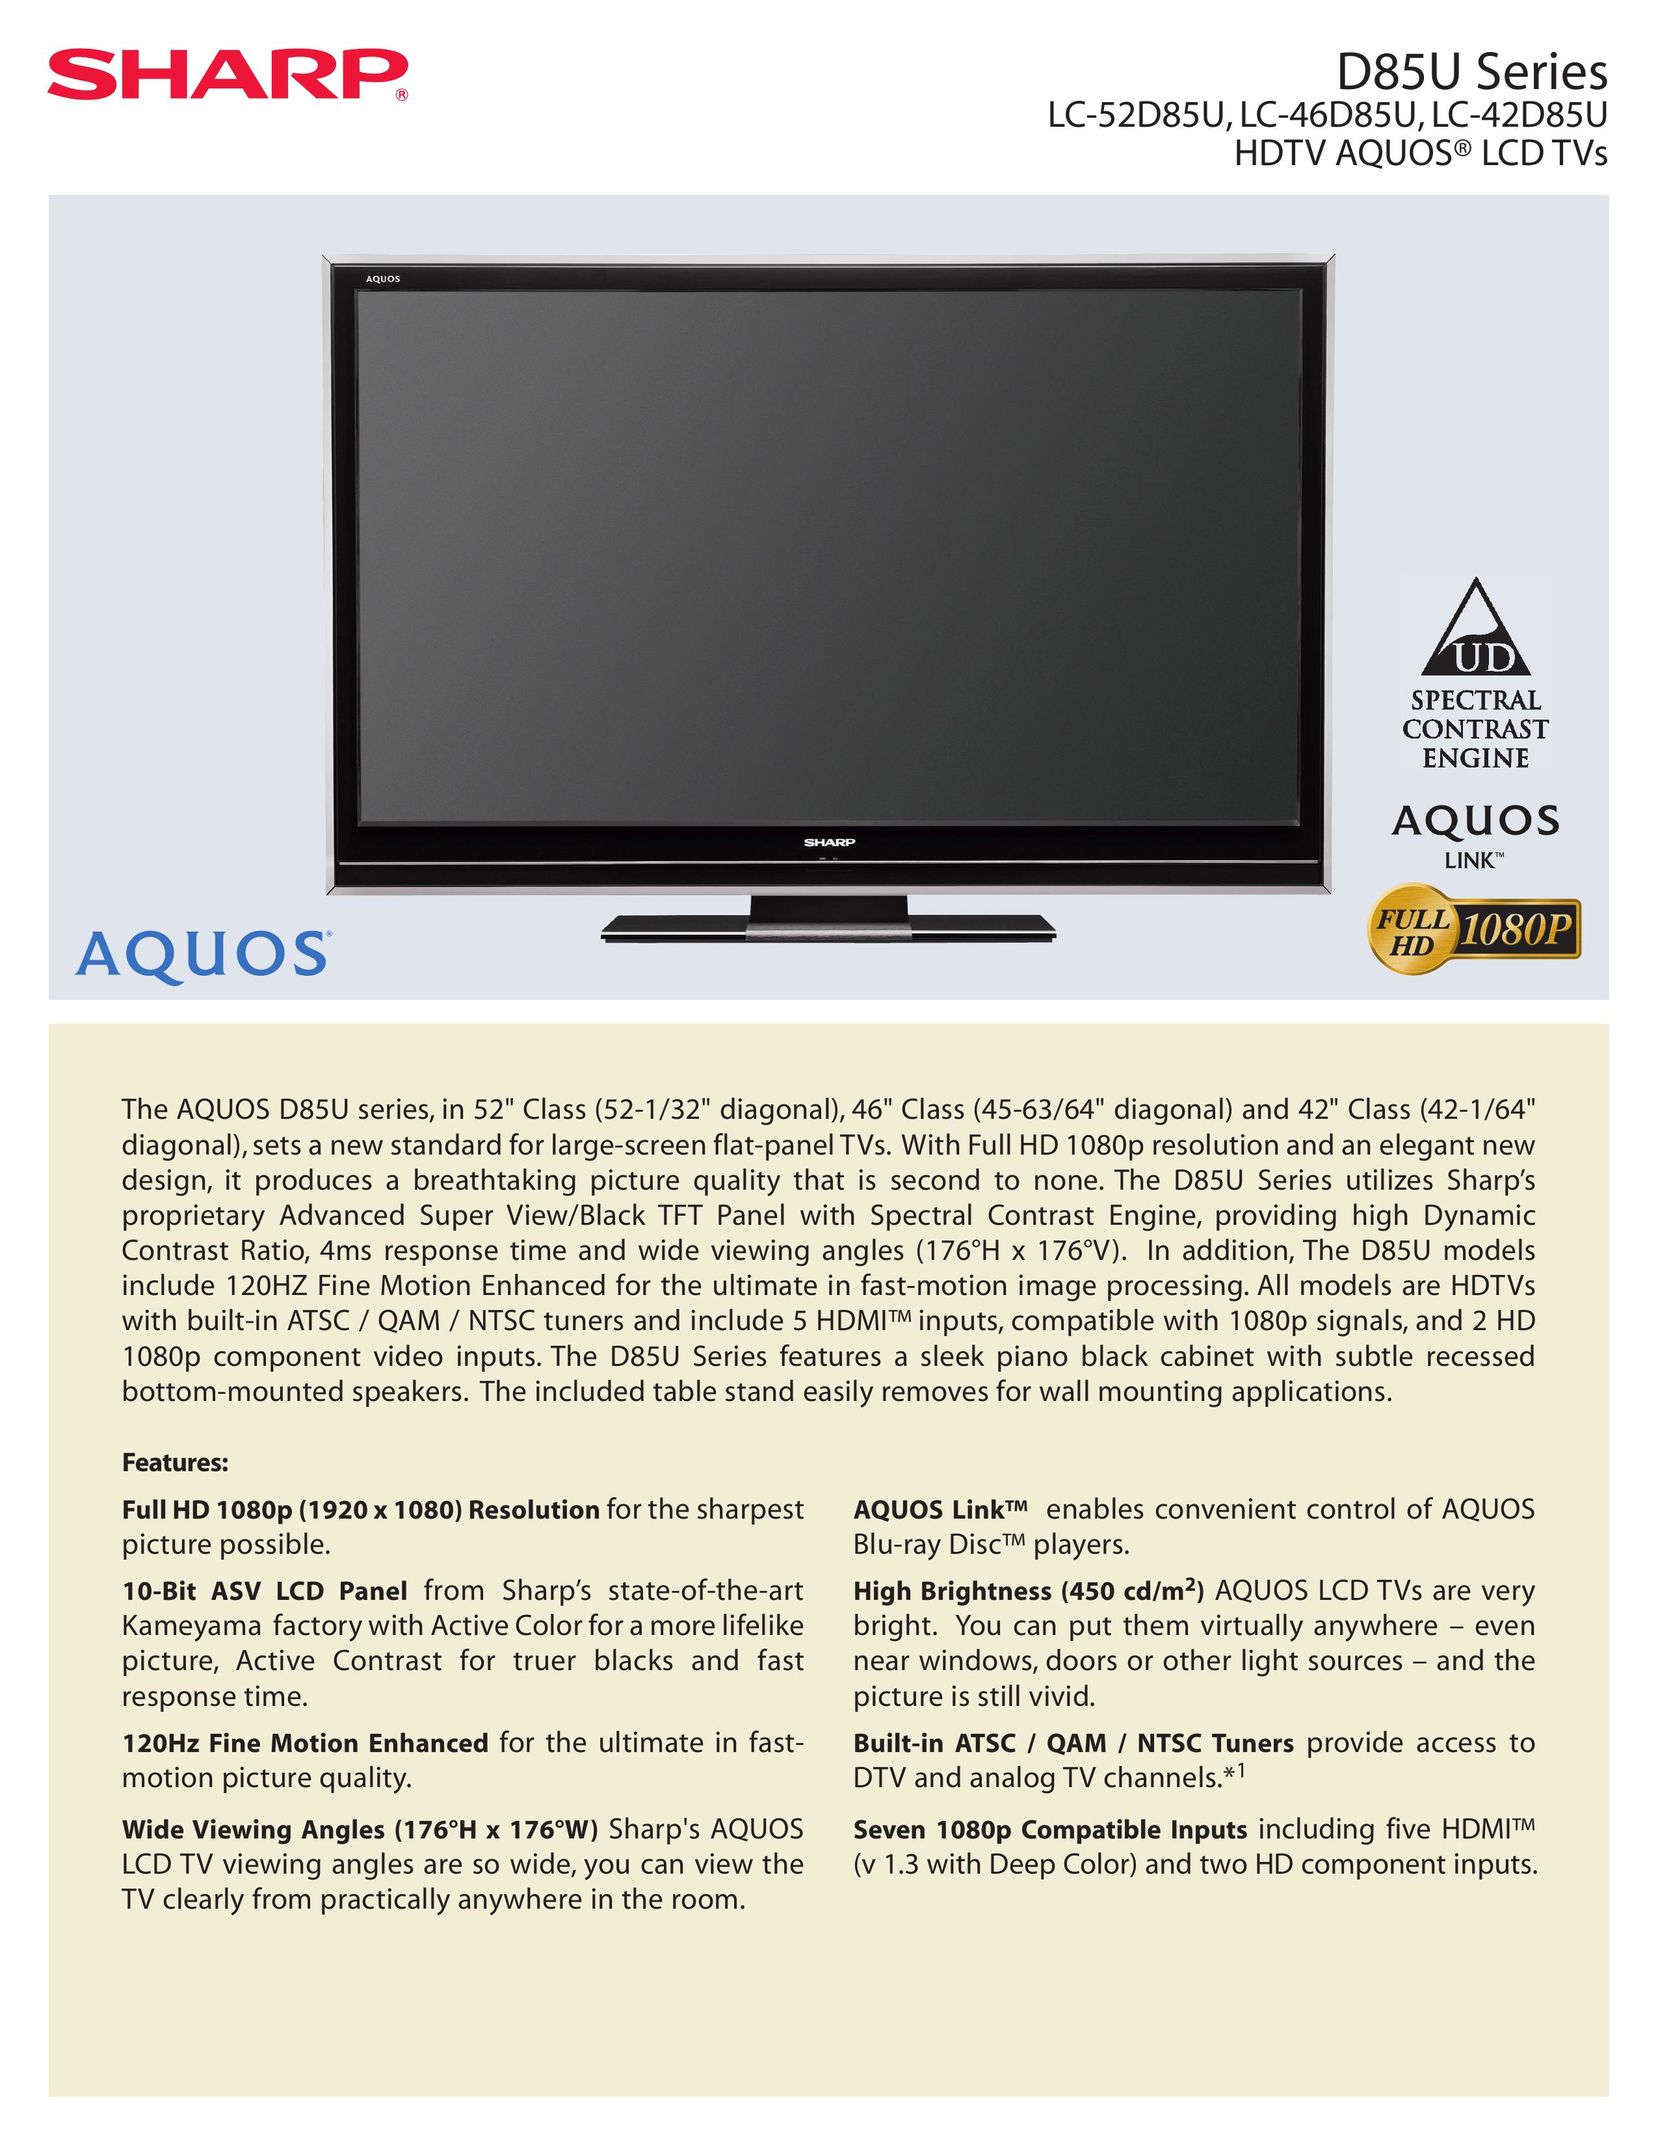 Sharp D85U Series Flat Panel Television User Manual